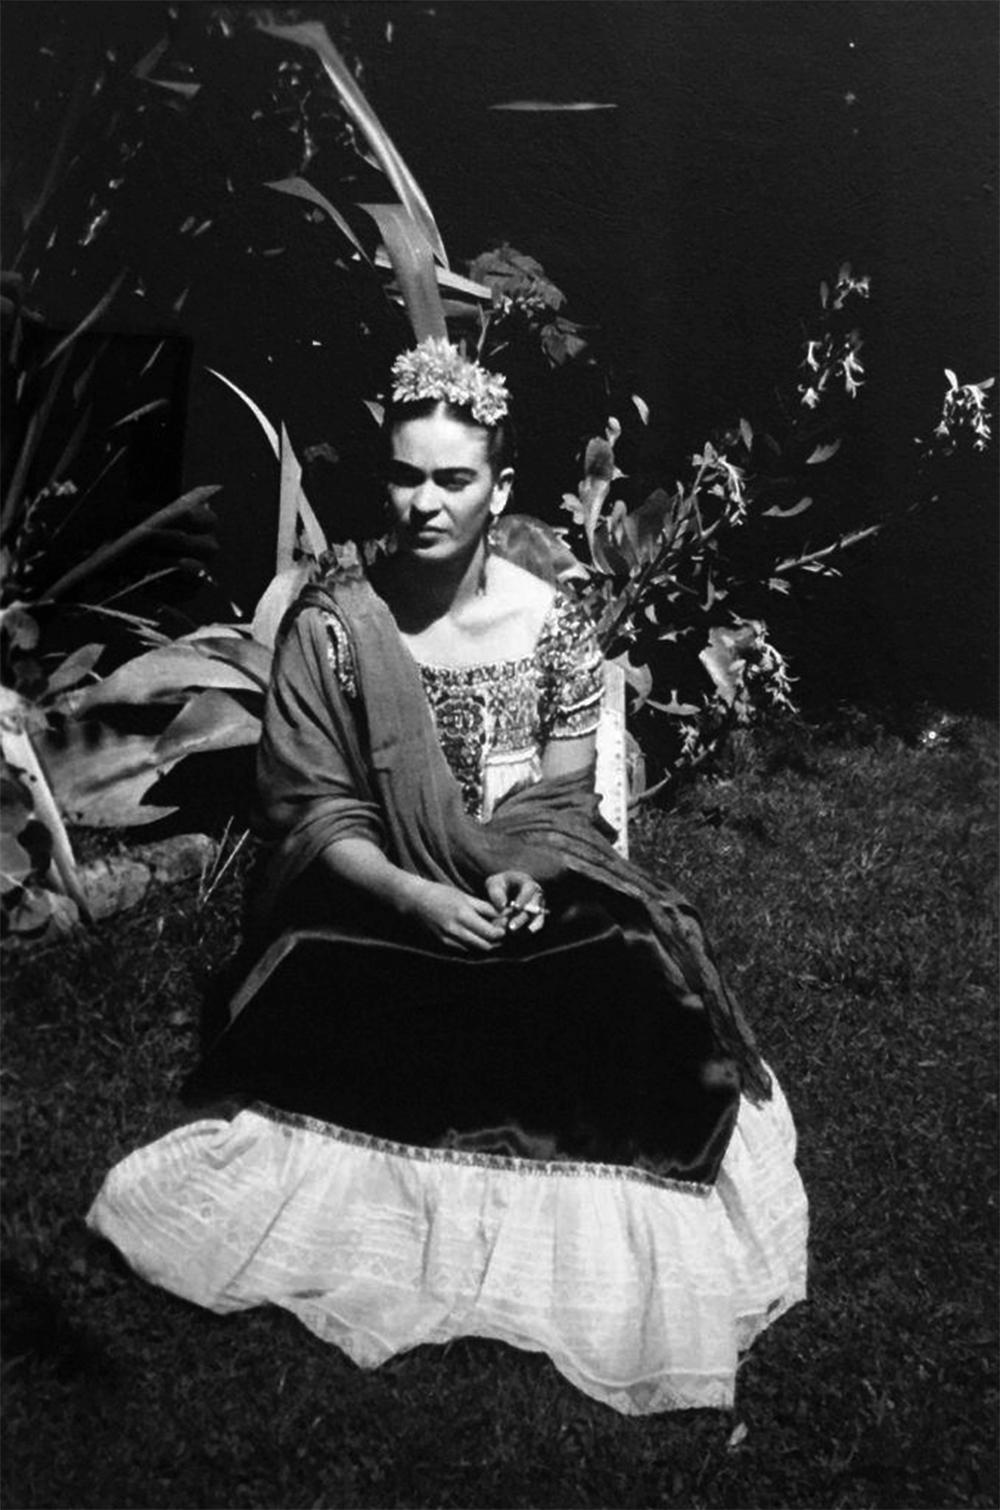 Frida en xochimilco, México by Leo Matiz
Image size: 23.5 in. H x 15.5 in. W
Frame size: 33 in. H x 25.5 in. W
1941.
Black and white photography. Unique Exhibition print.
Framed. 
“Printed later by the Leo Matiz Estate